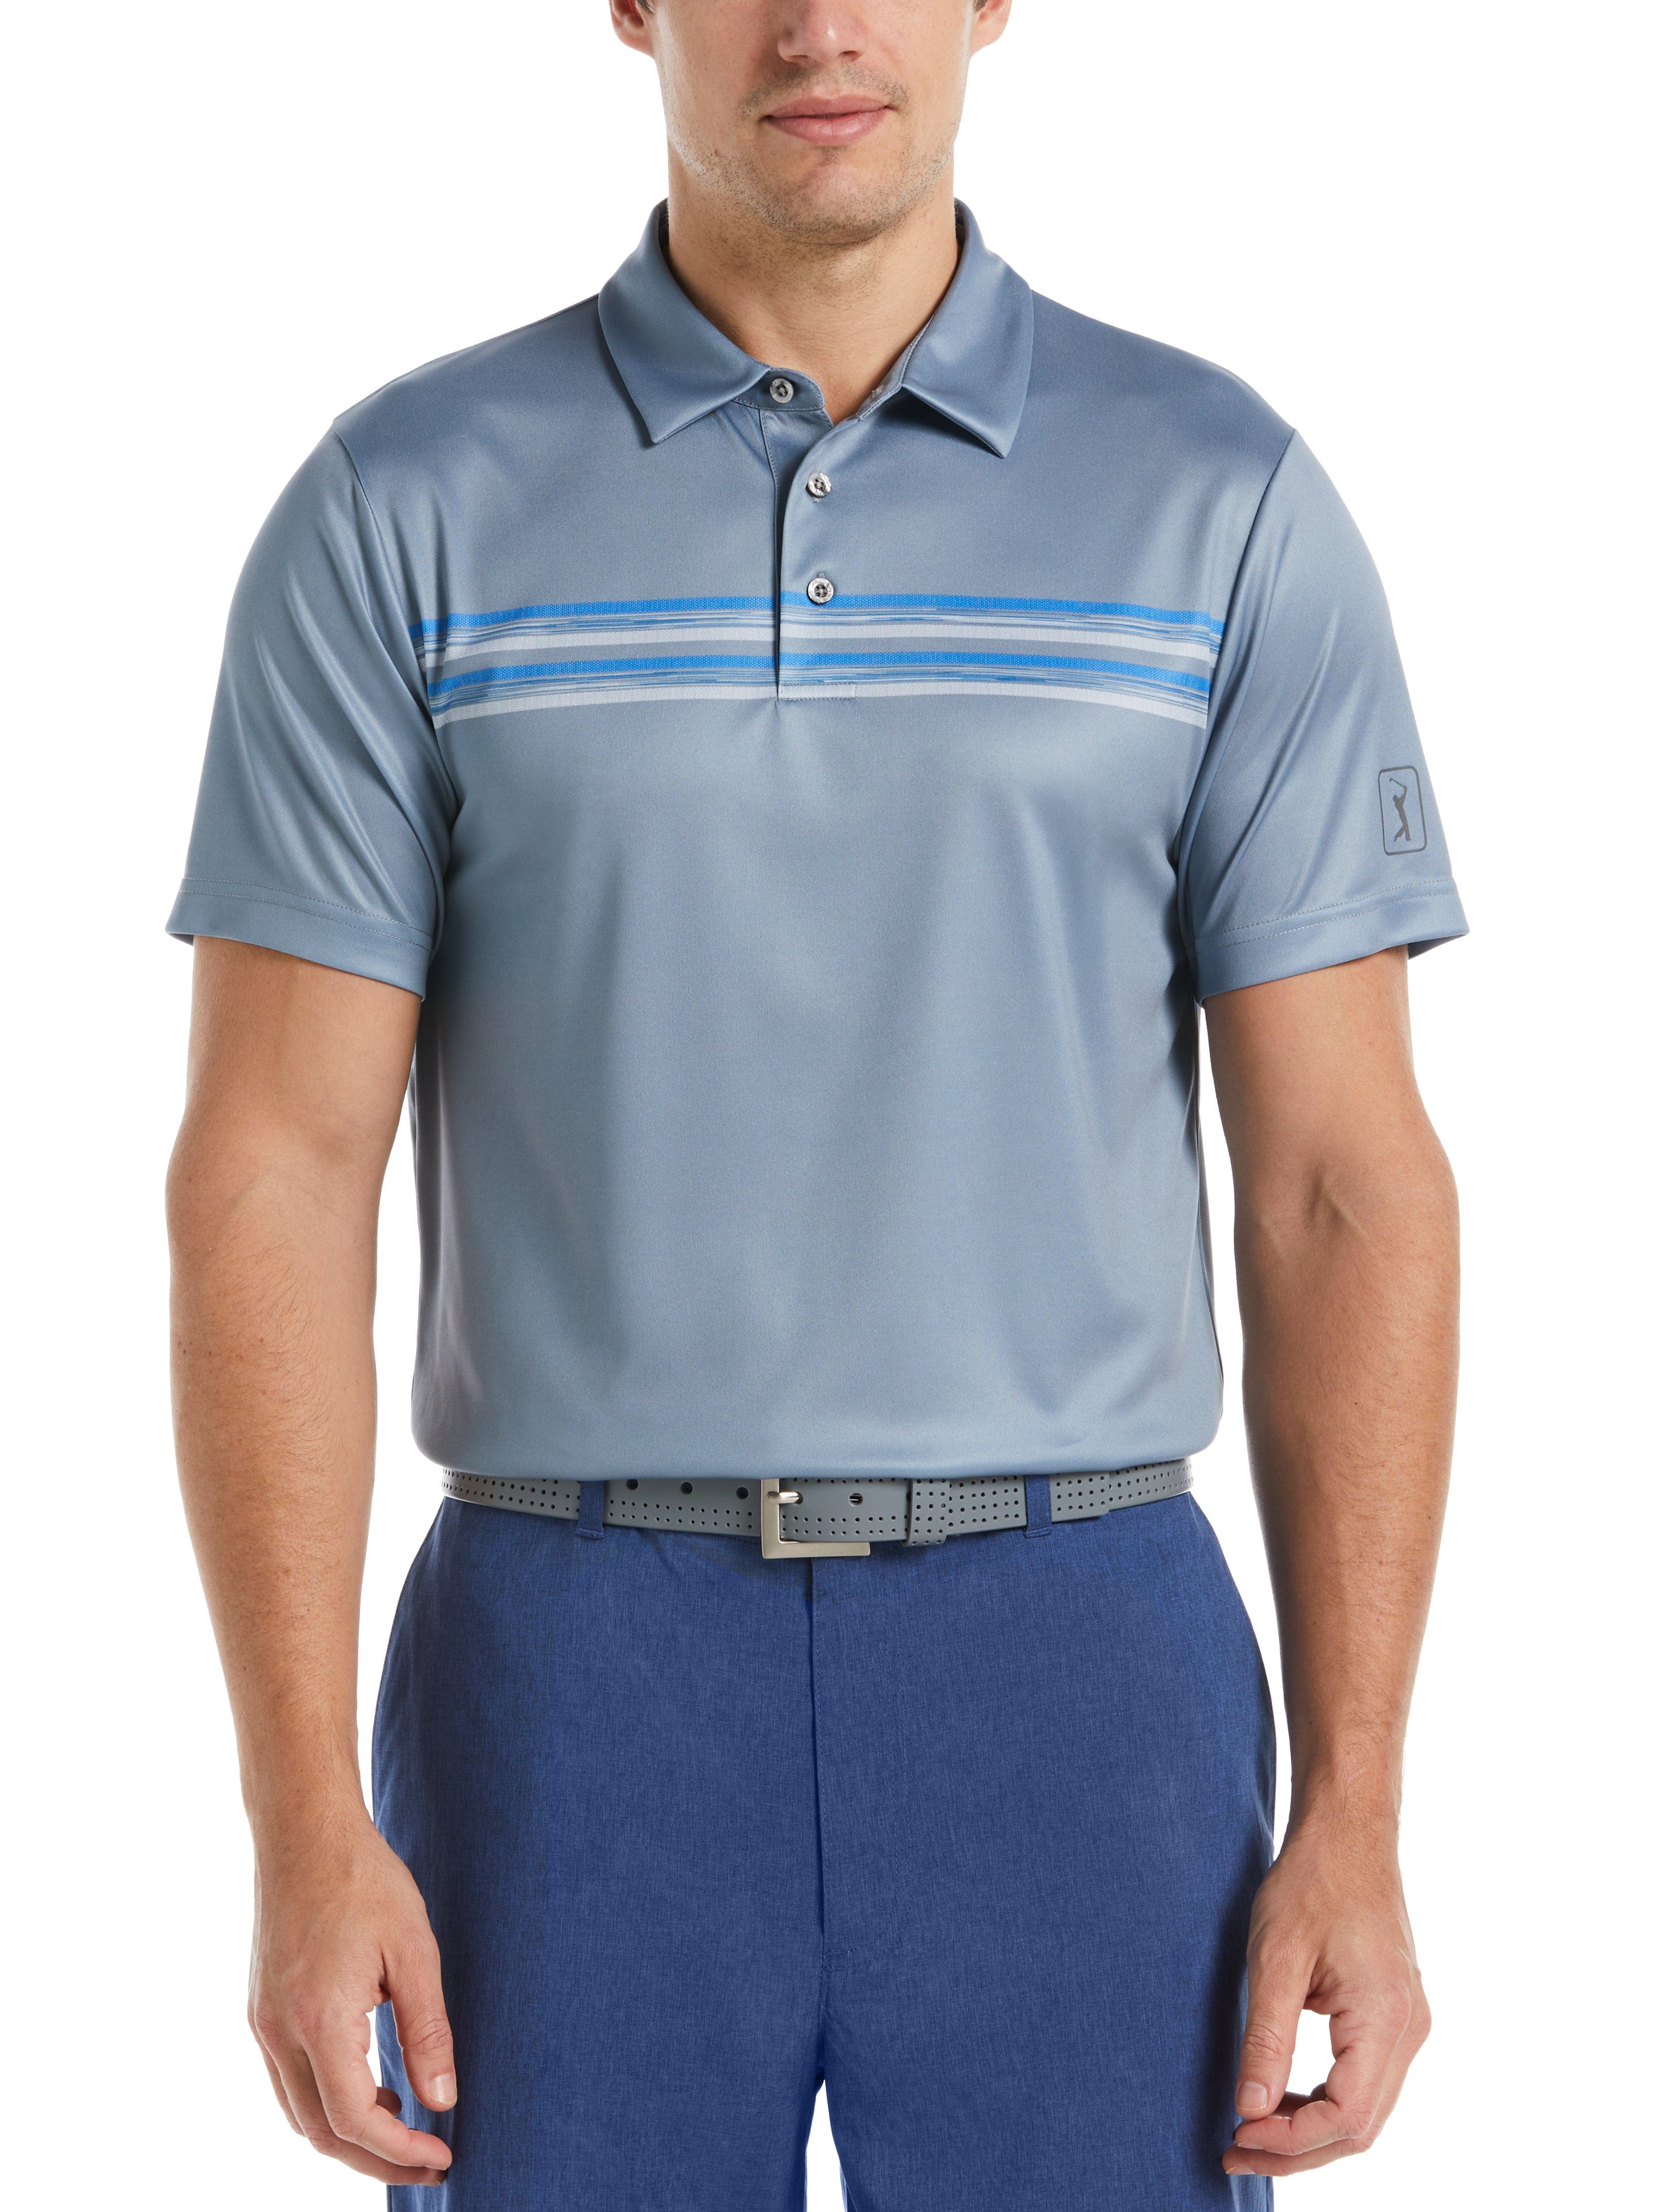 PGA TOUR Apparel Mens Chest Stripe Golf Polo Shirt, Size Medium, Tradewinds Gray, 100% Polyester | Golf Apparel Shop